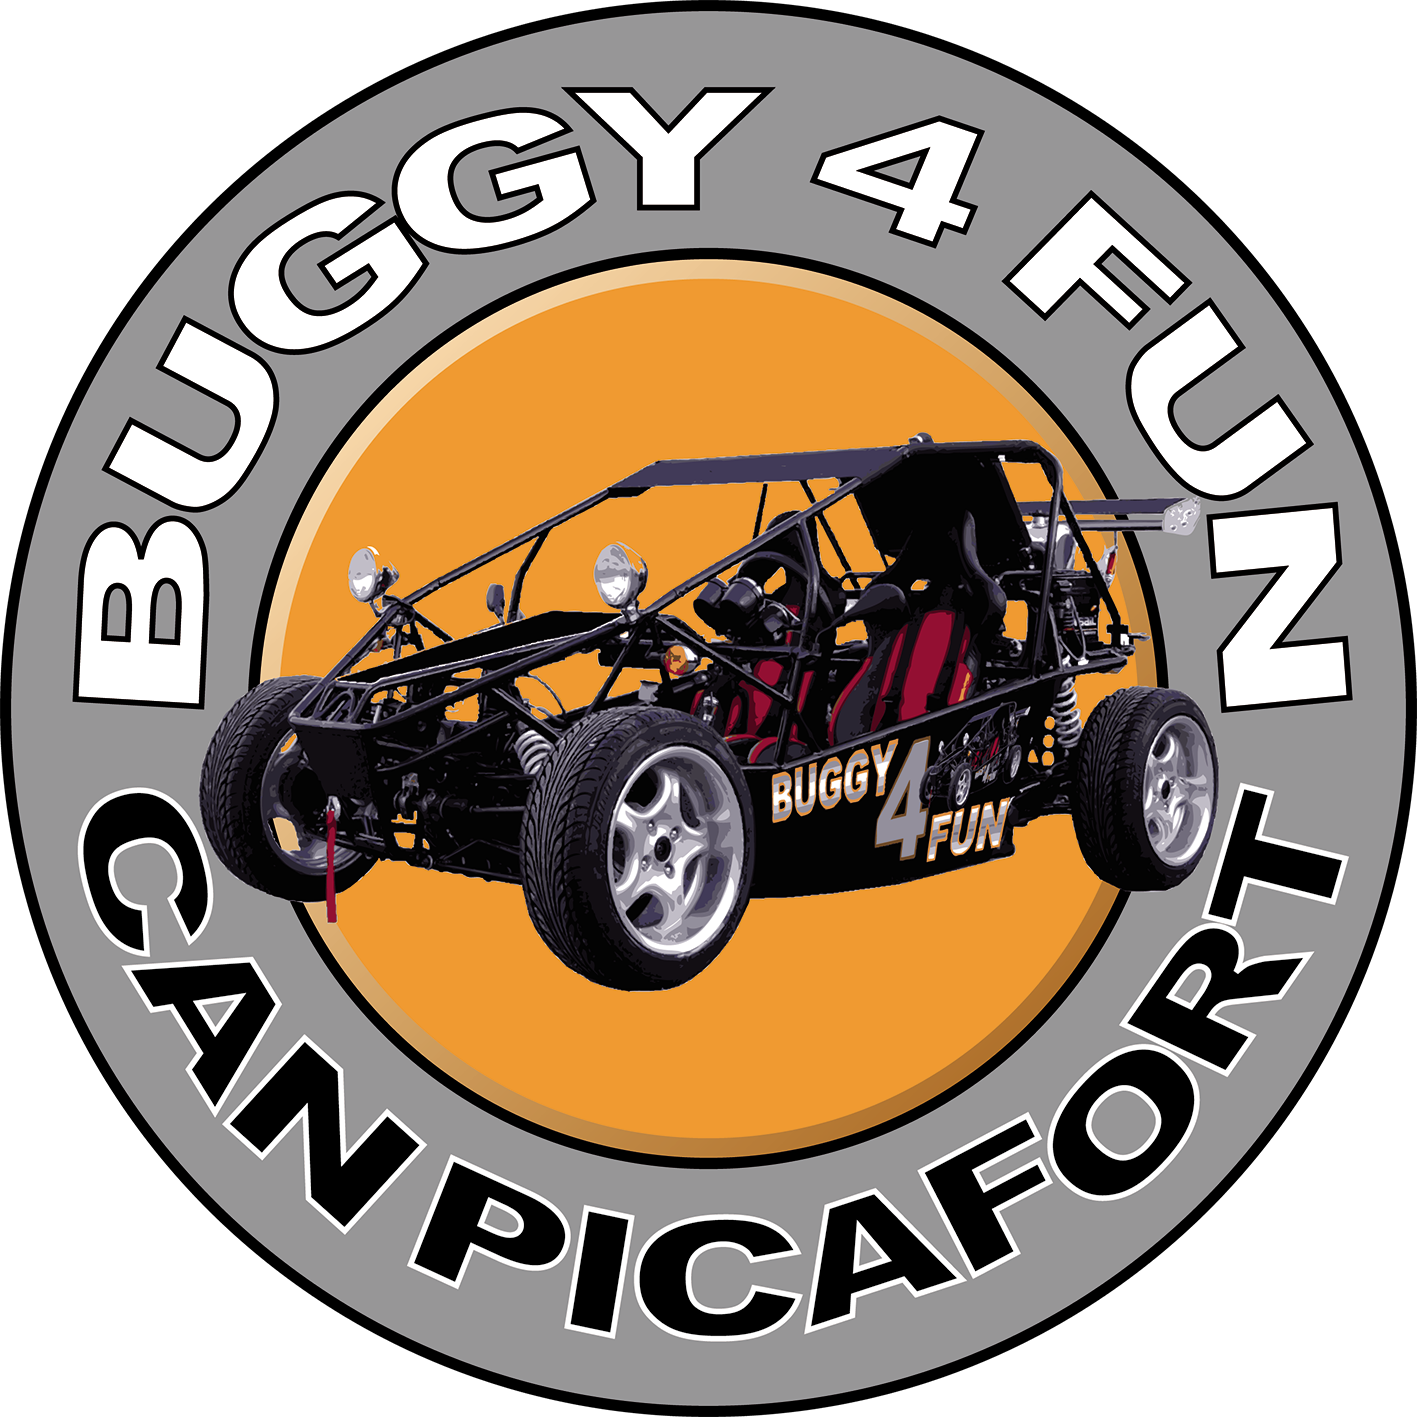 Buggy4fun Canpicafort